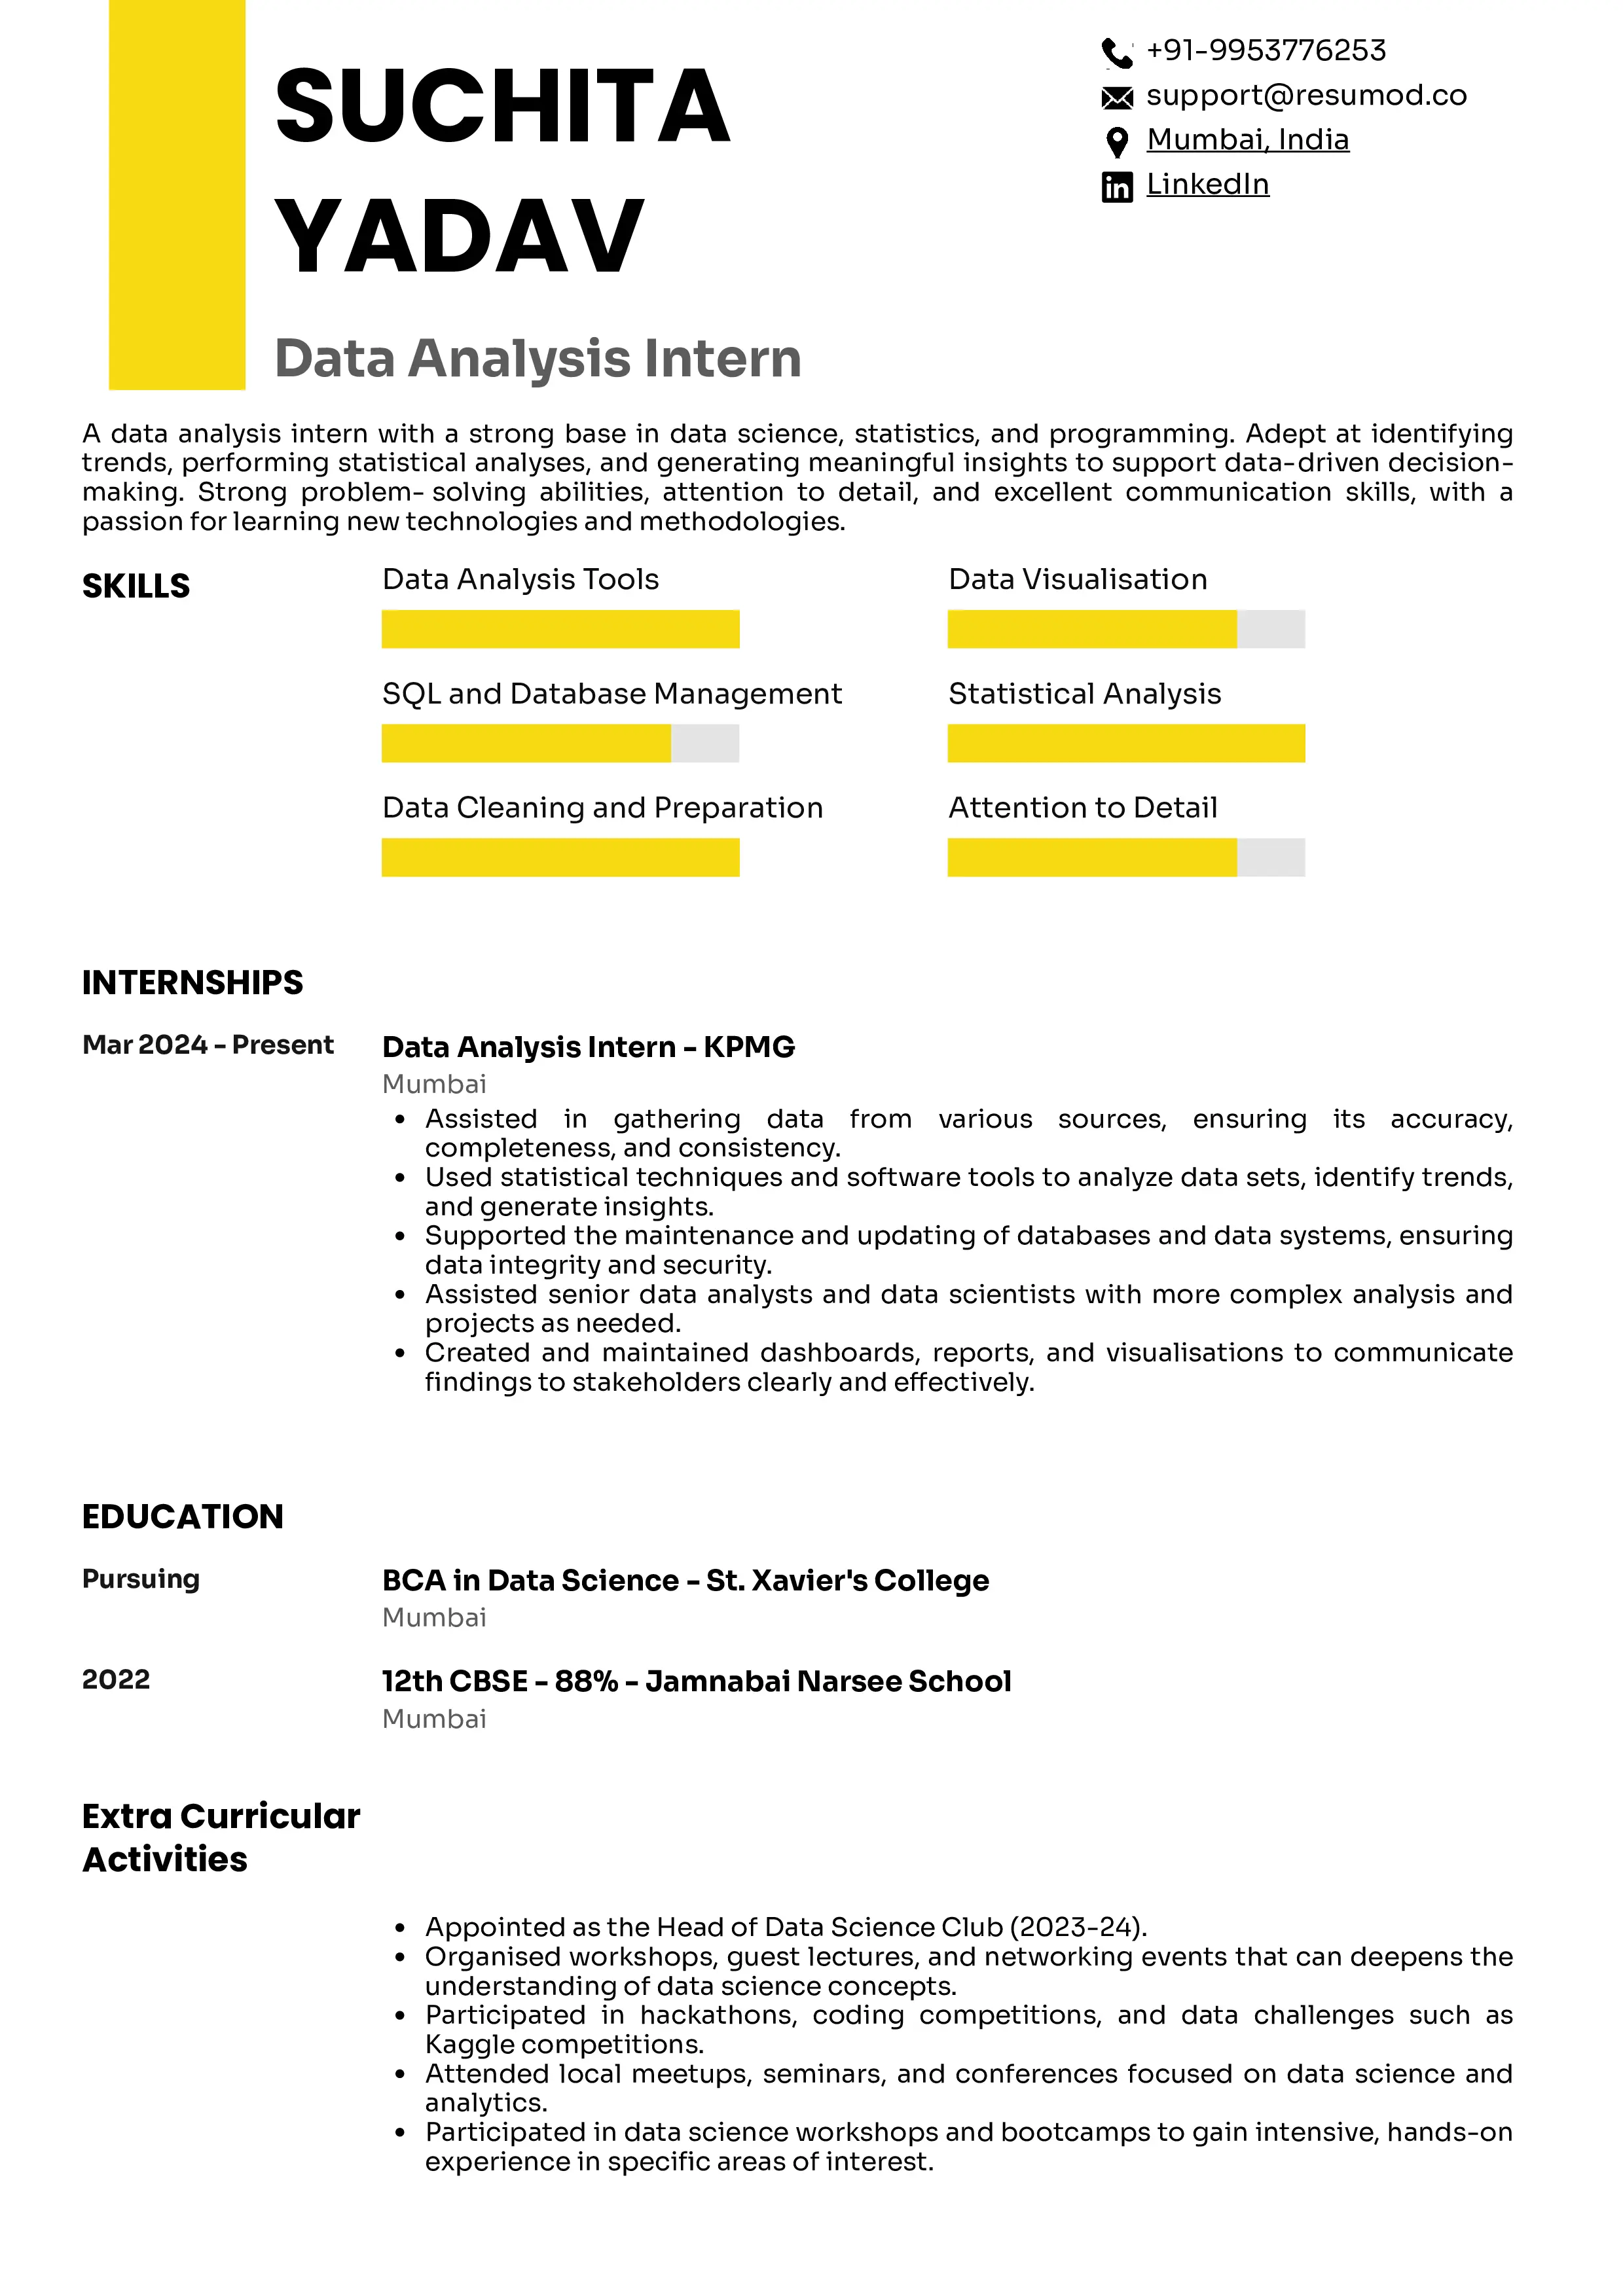 Sample Resume of Data Analysis Intern | Free Resume Templates & Samples on Resumod.co